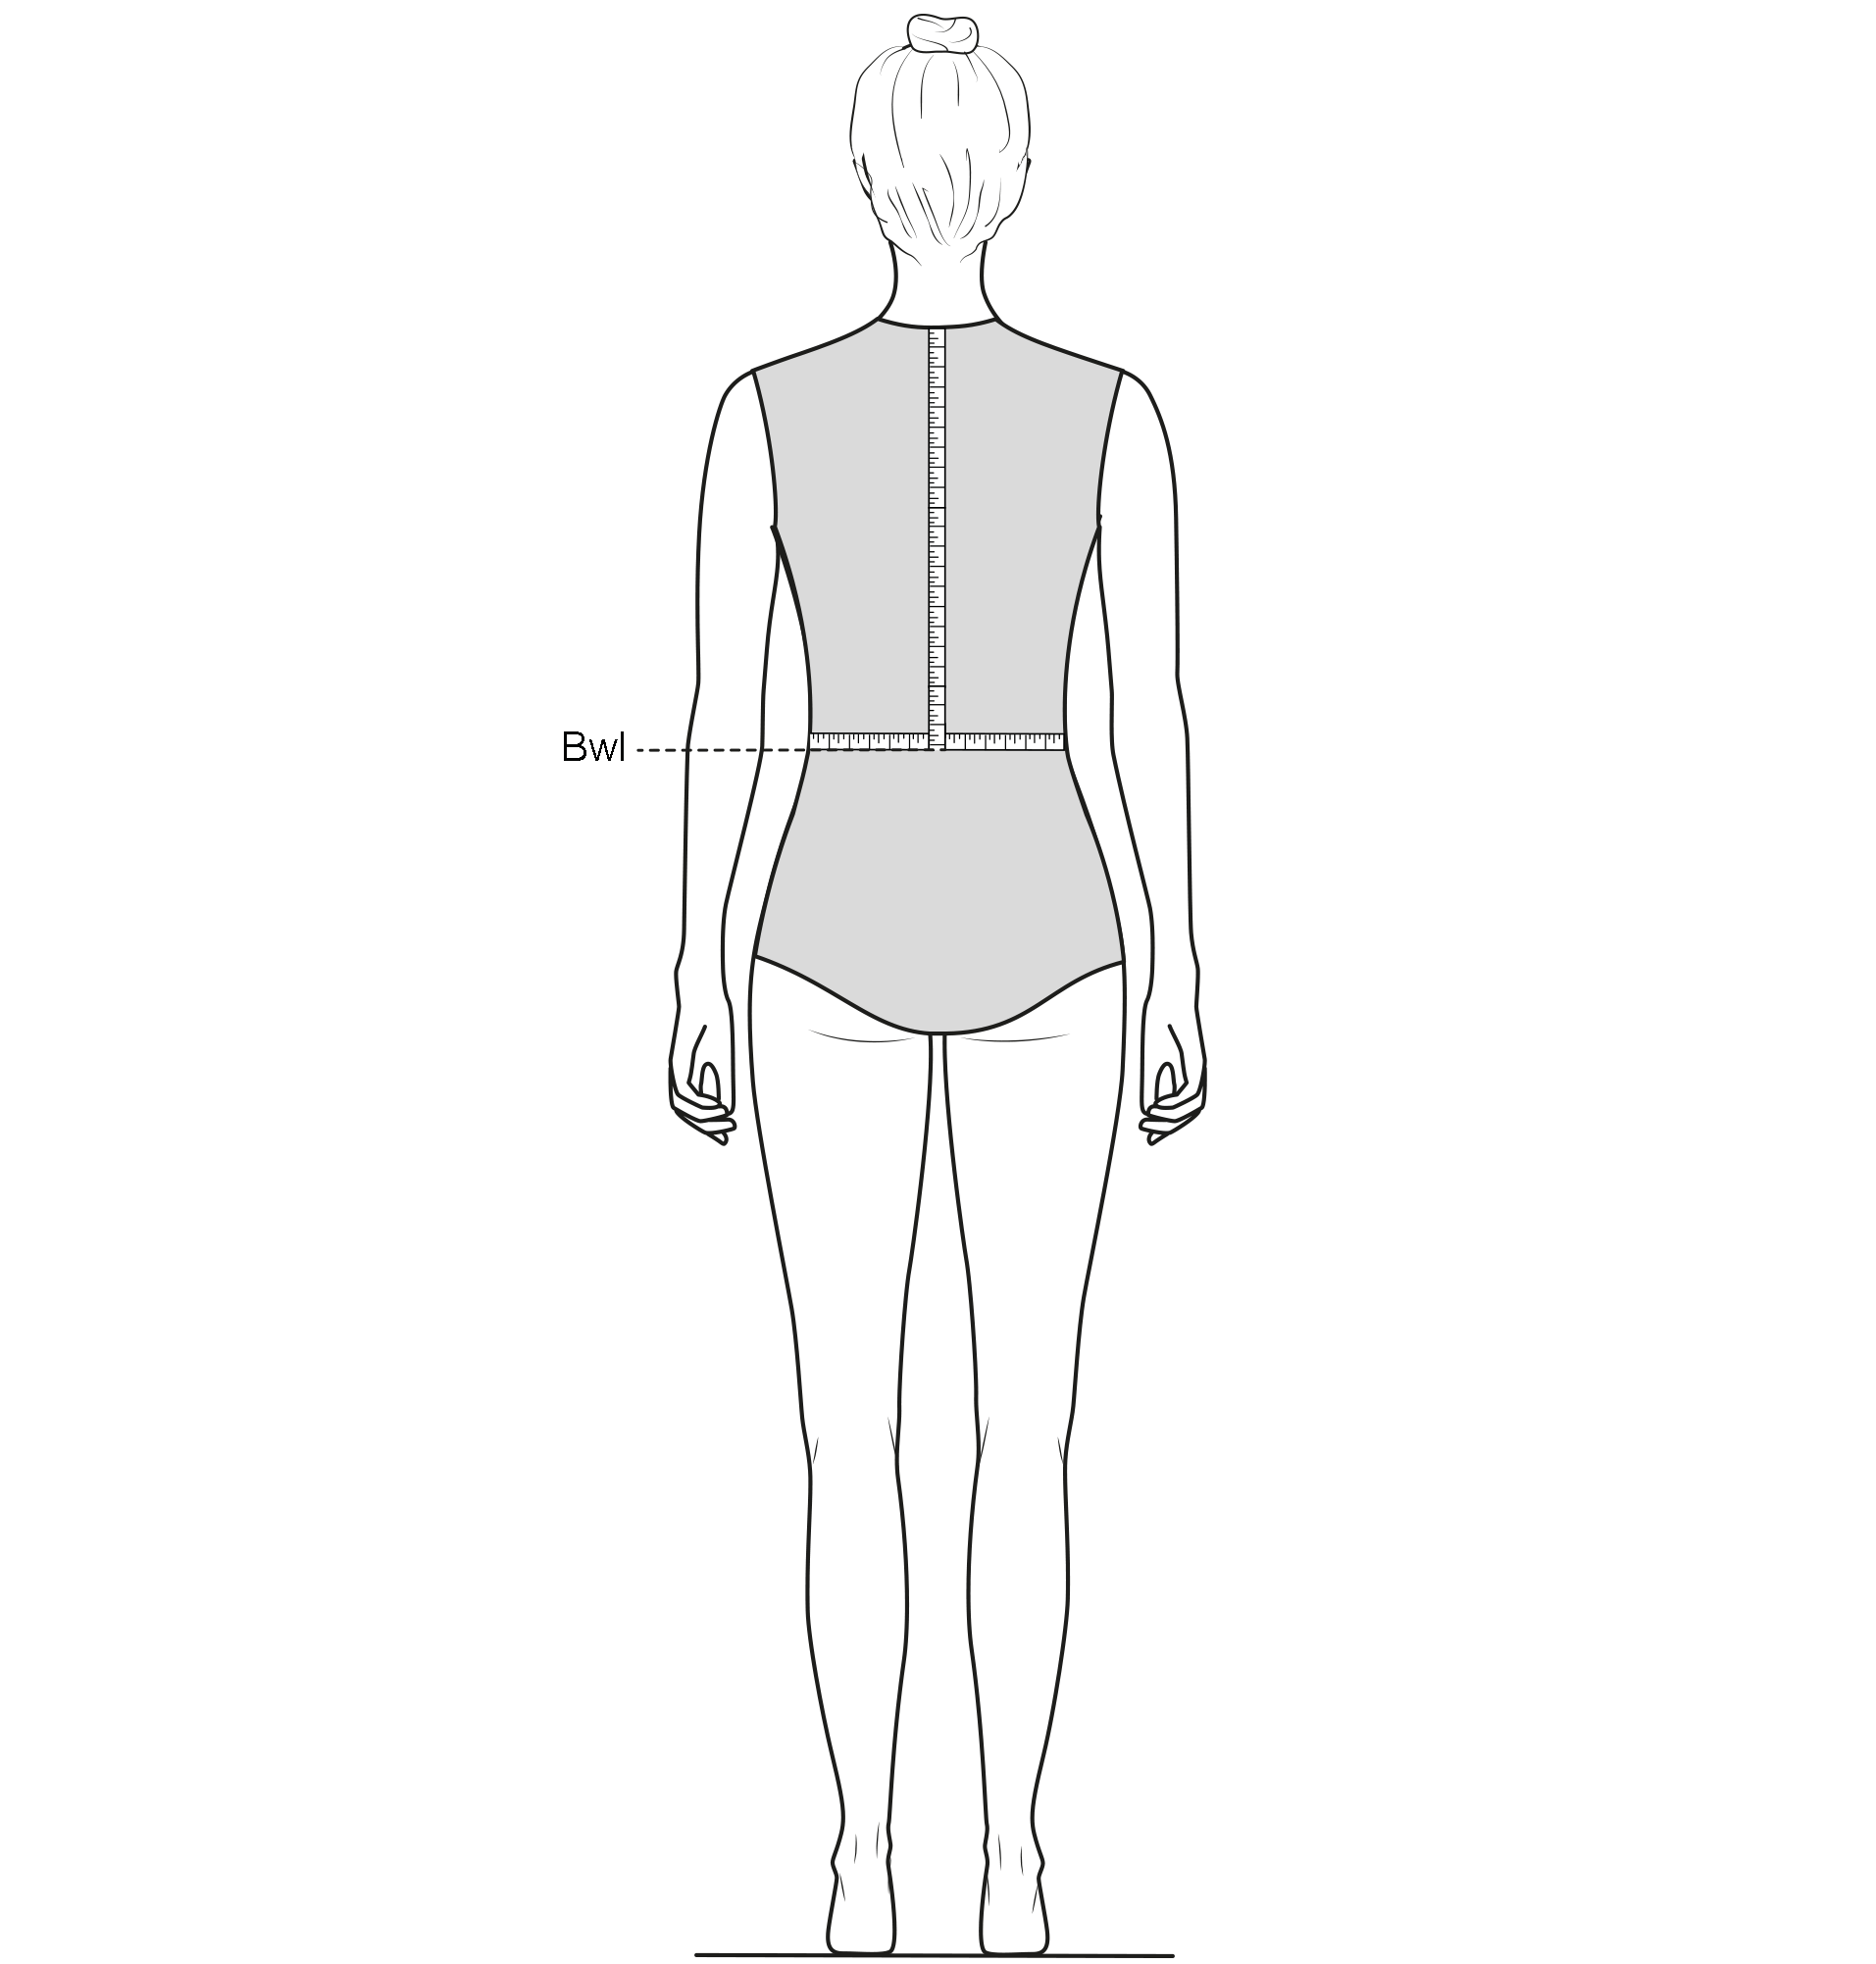 https://www.muellerundsohn.com/en/app/uploads/sites/2/2019/10/Measurements_Back_waist_length.png